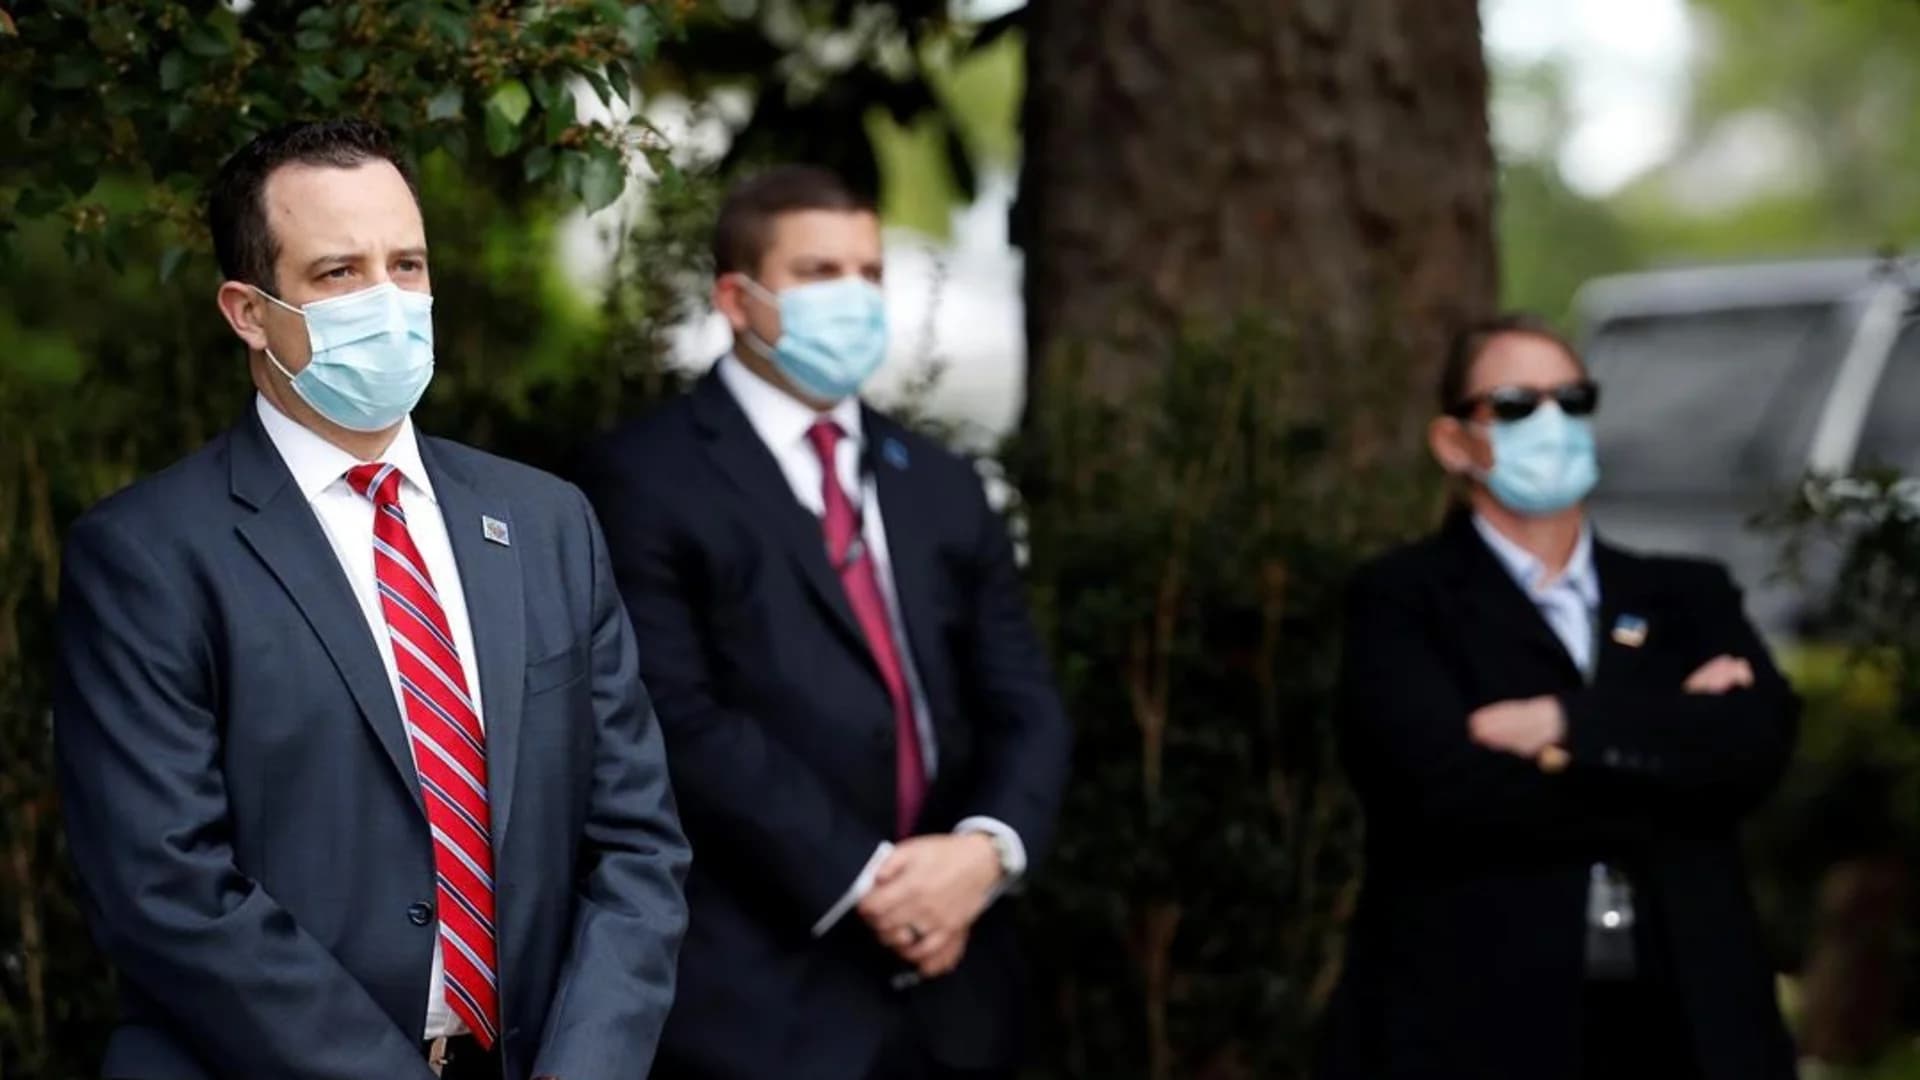 Coronavirus headlines for May 11: White House staffers must wear masks at work